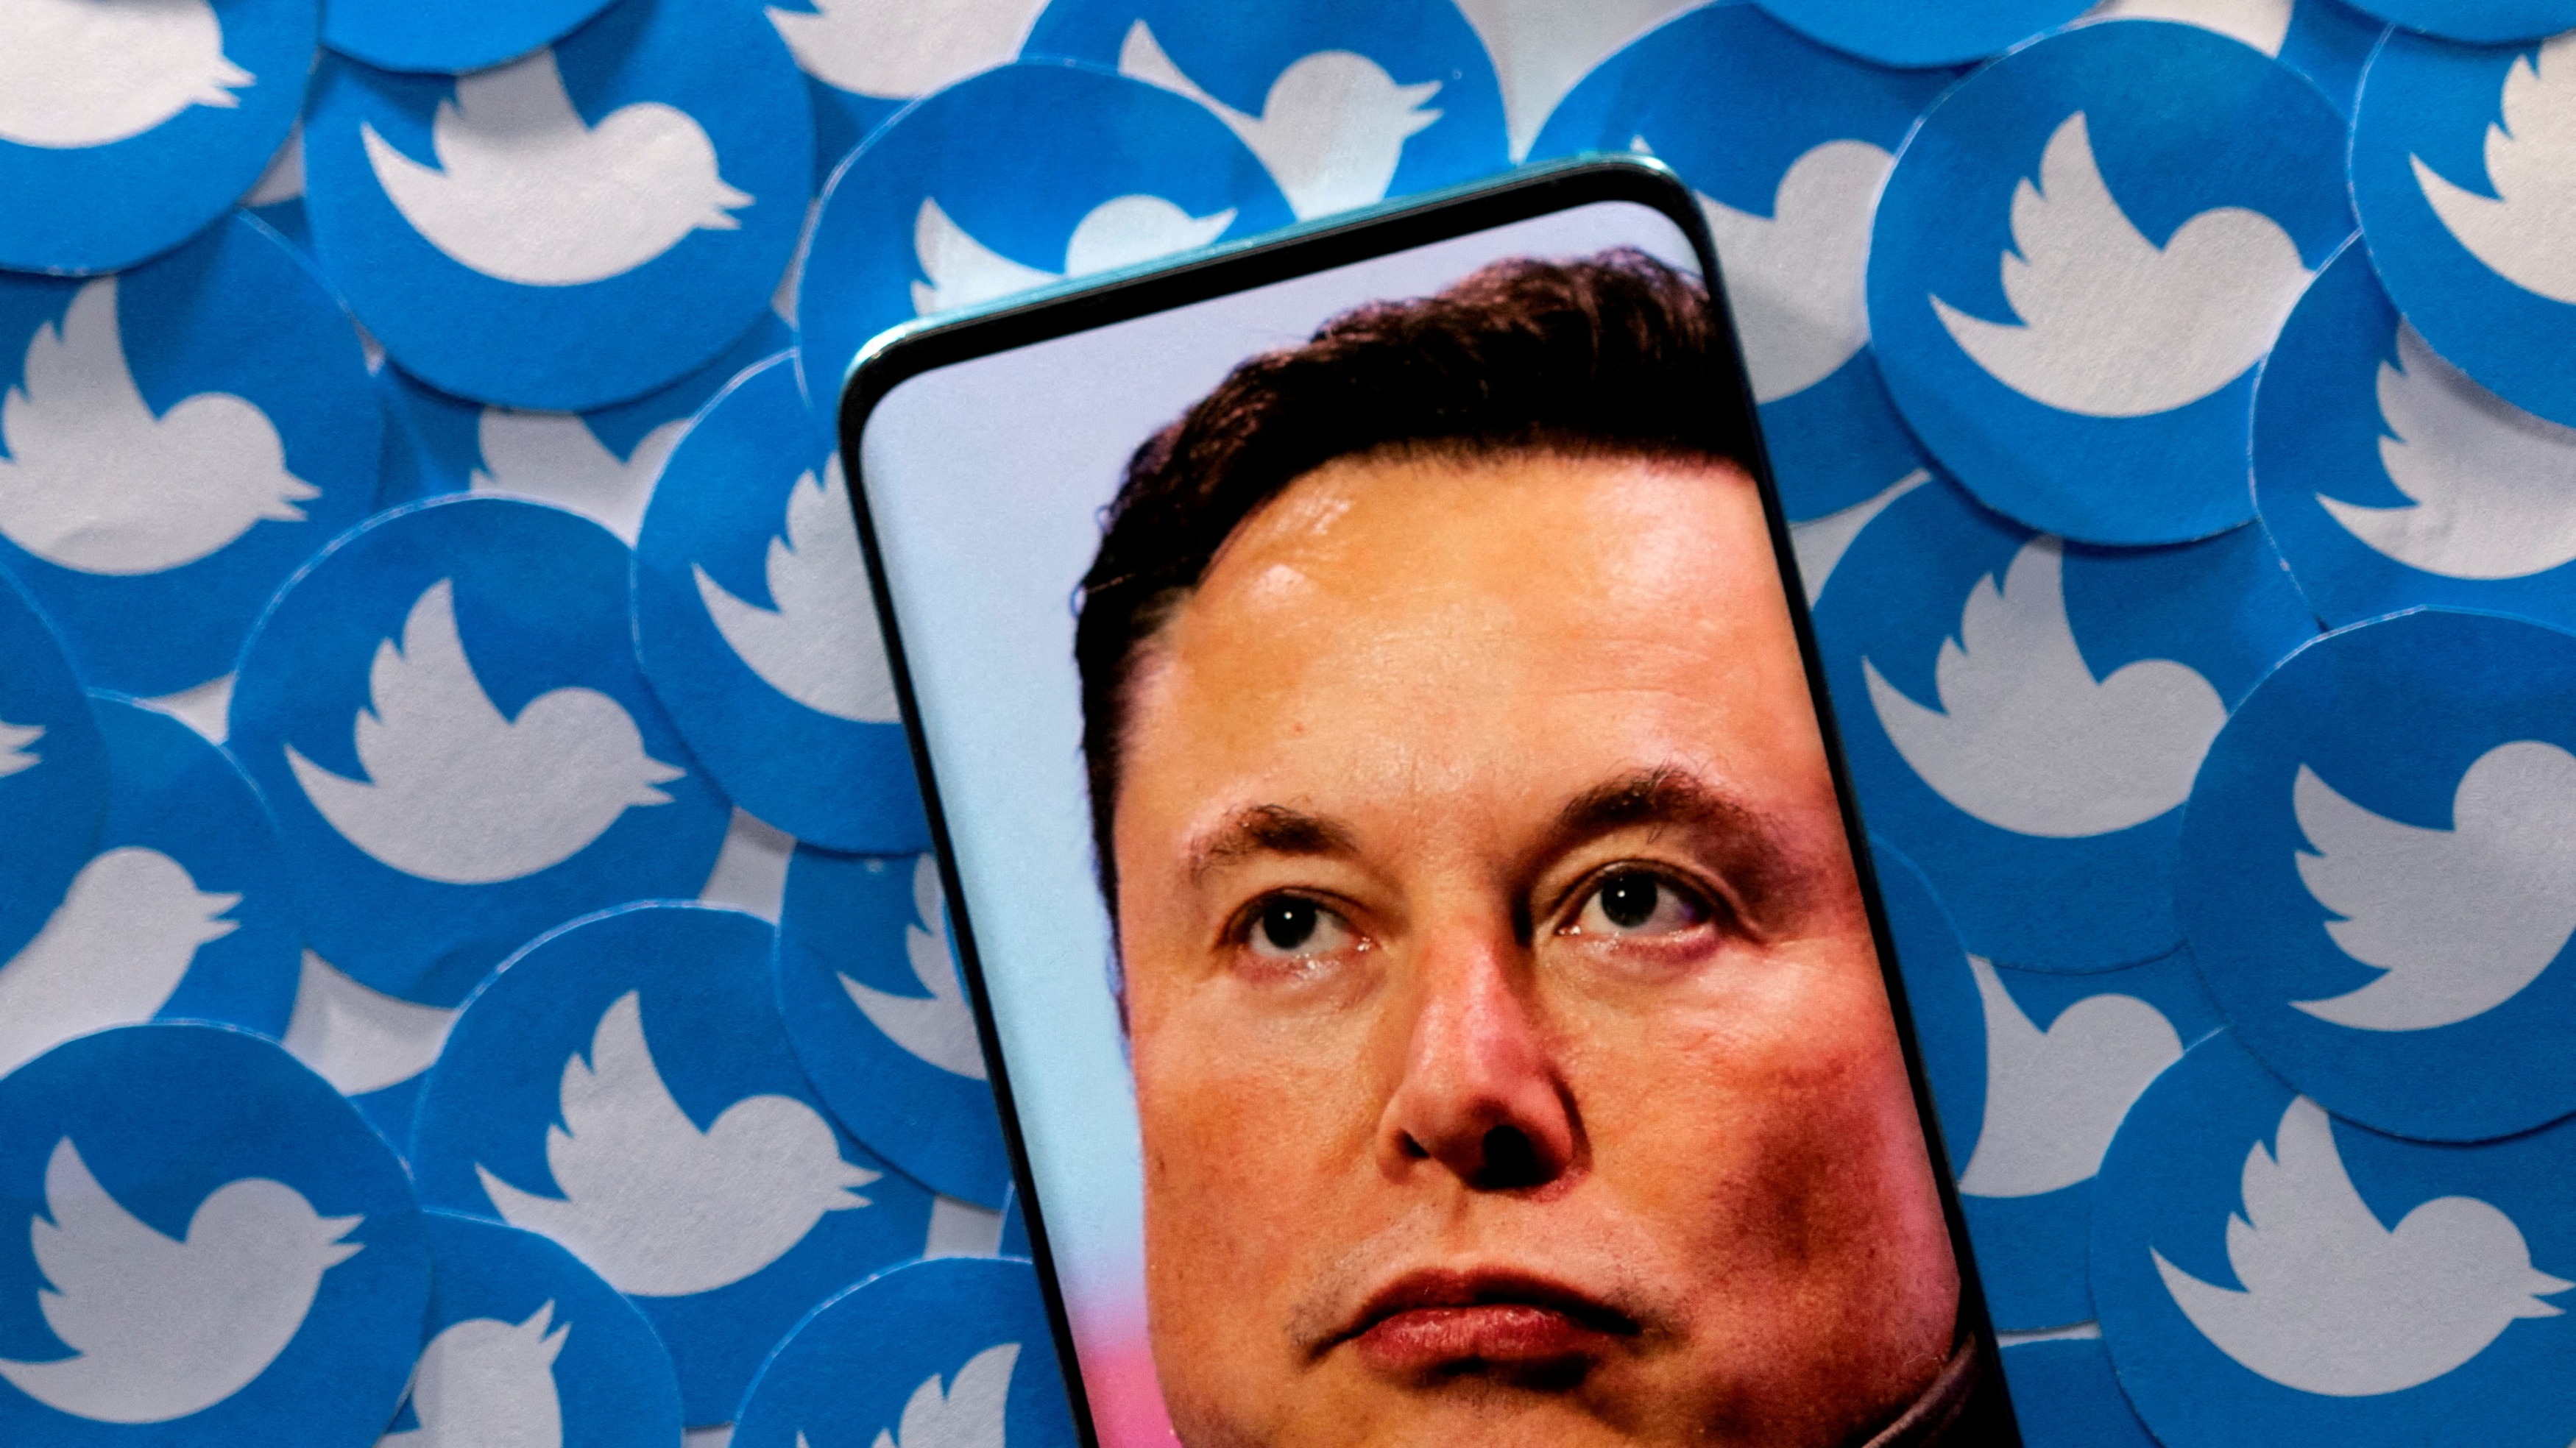 Elon Musk abandons Twitter deal, company threatens legal action